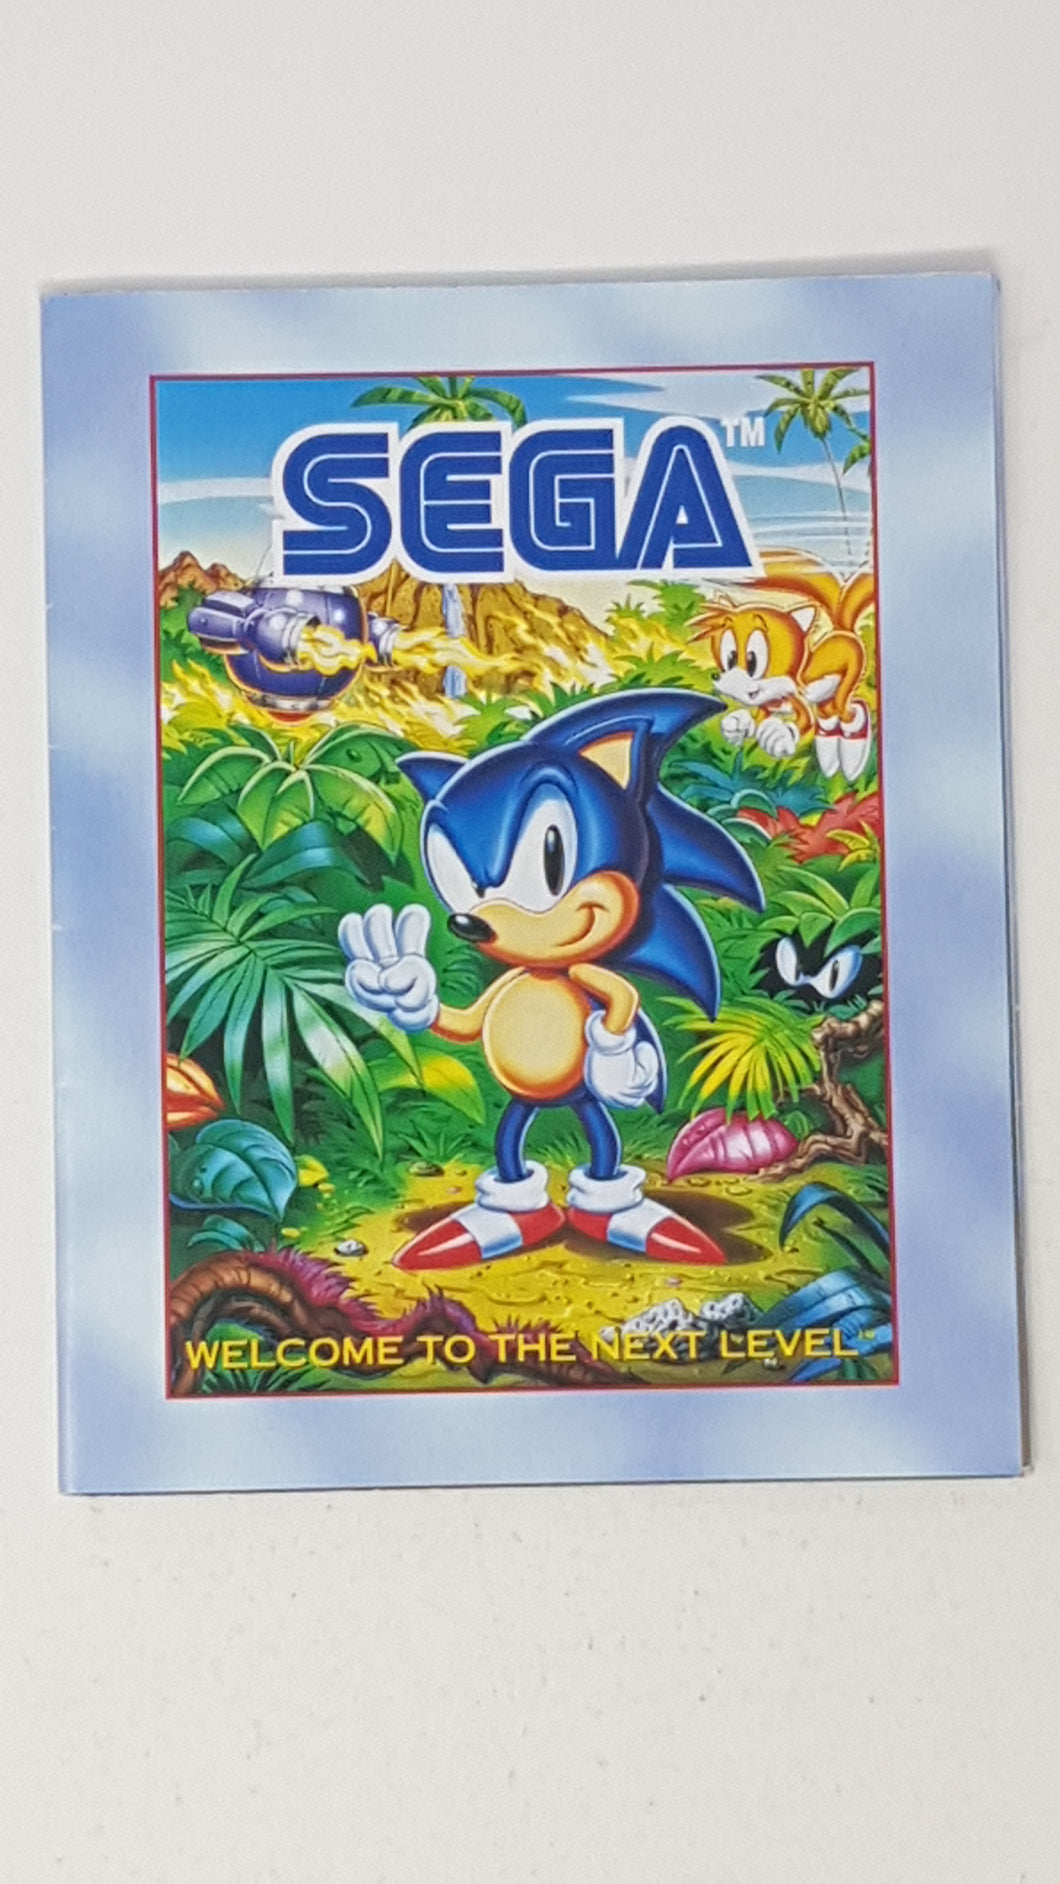 Eternal Champions Sonic Hedgehog 3 Game [Poster] - Sega Genesis